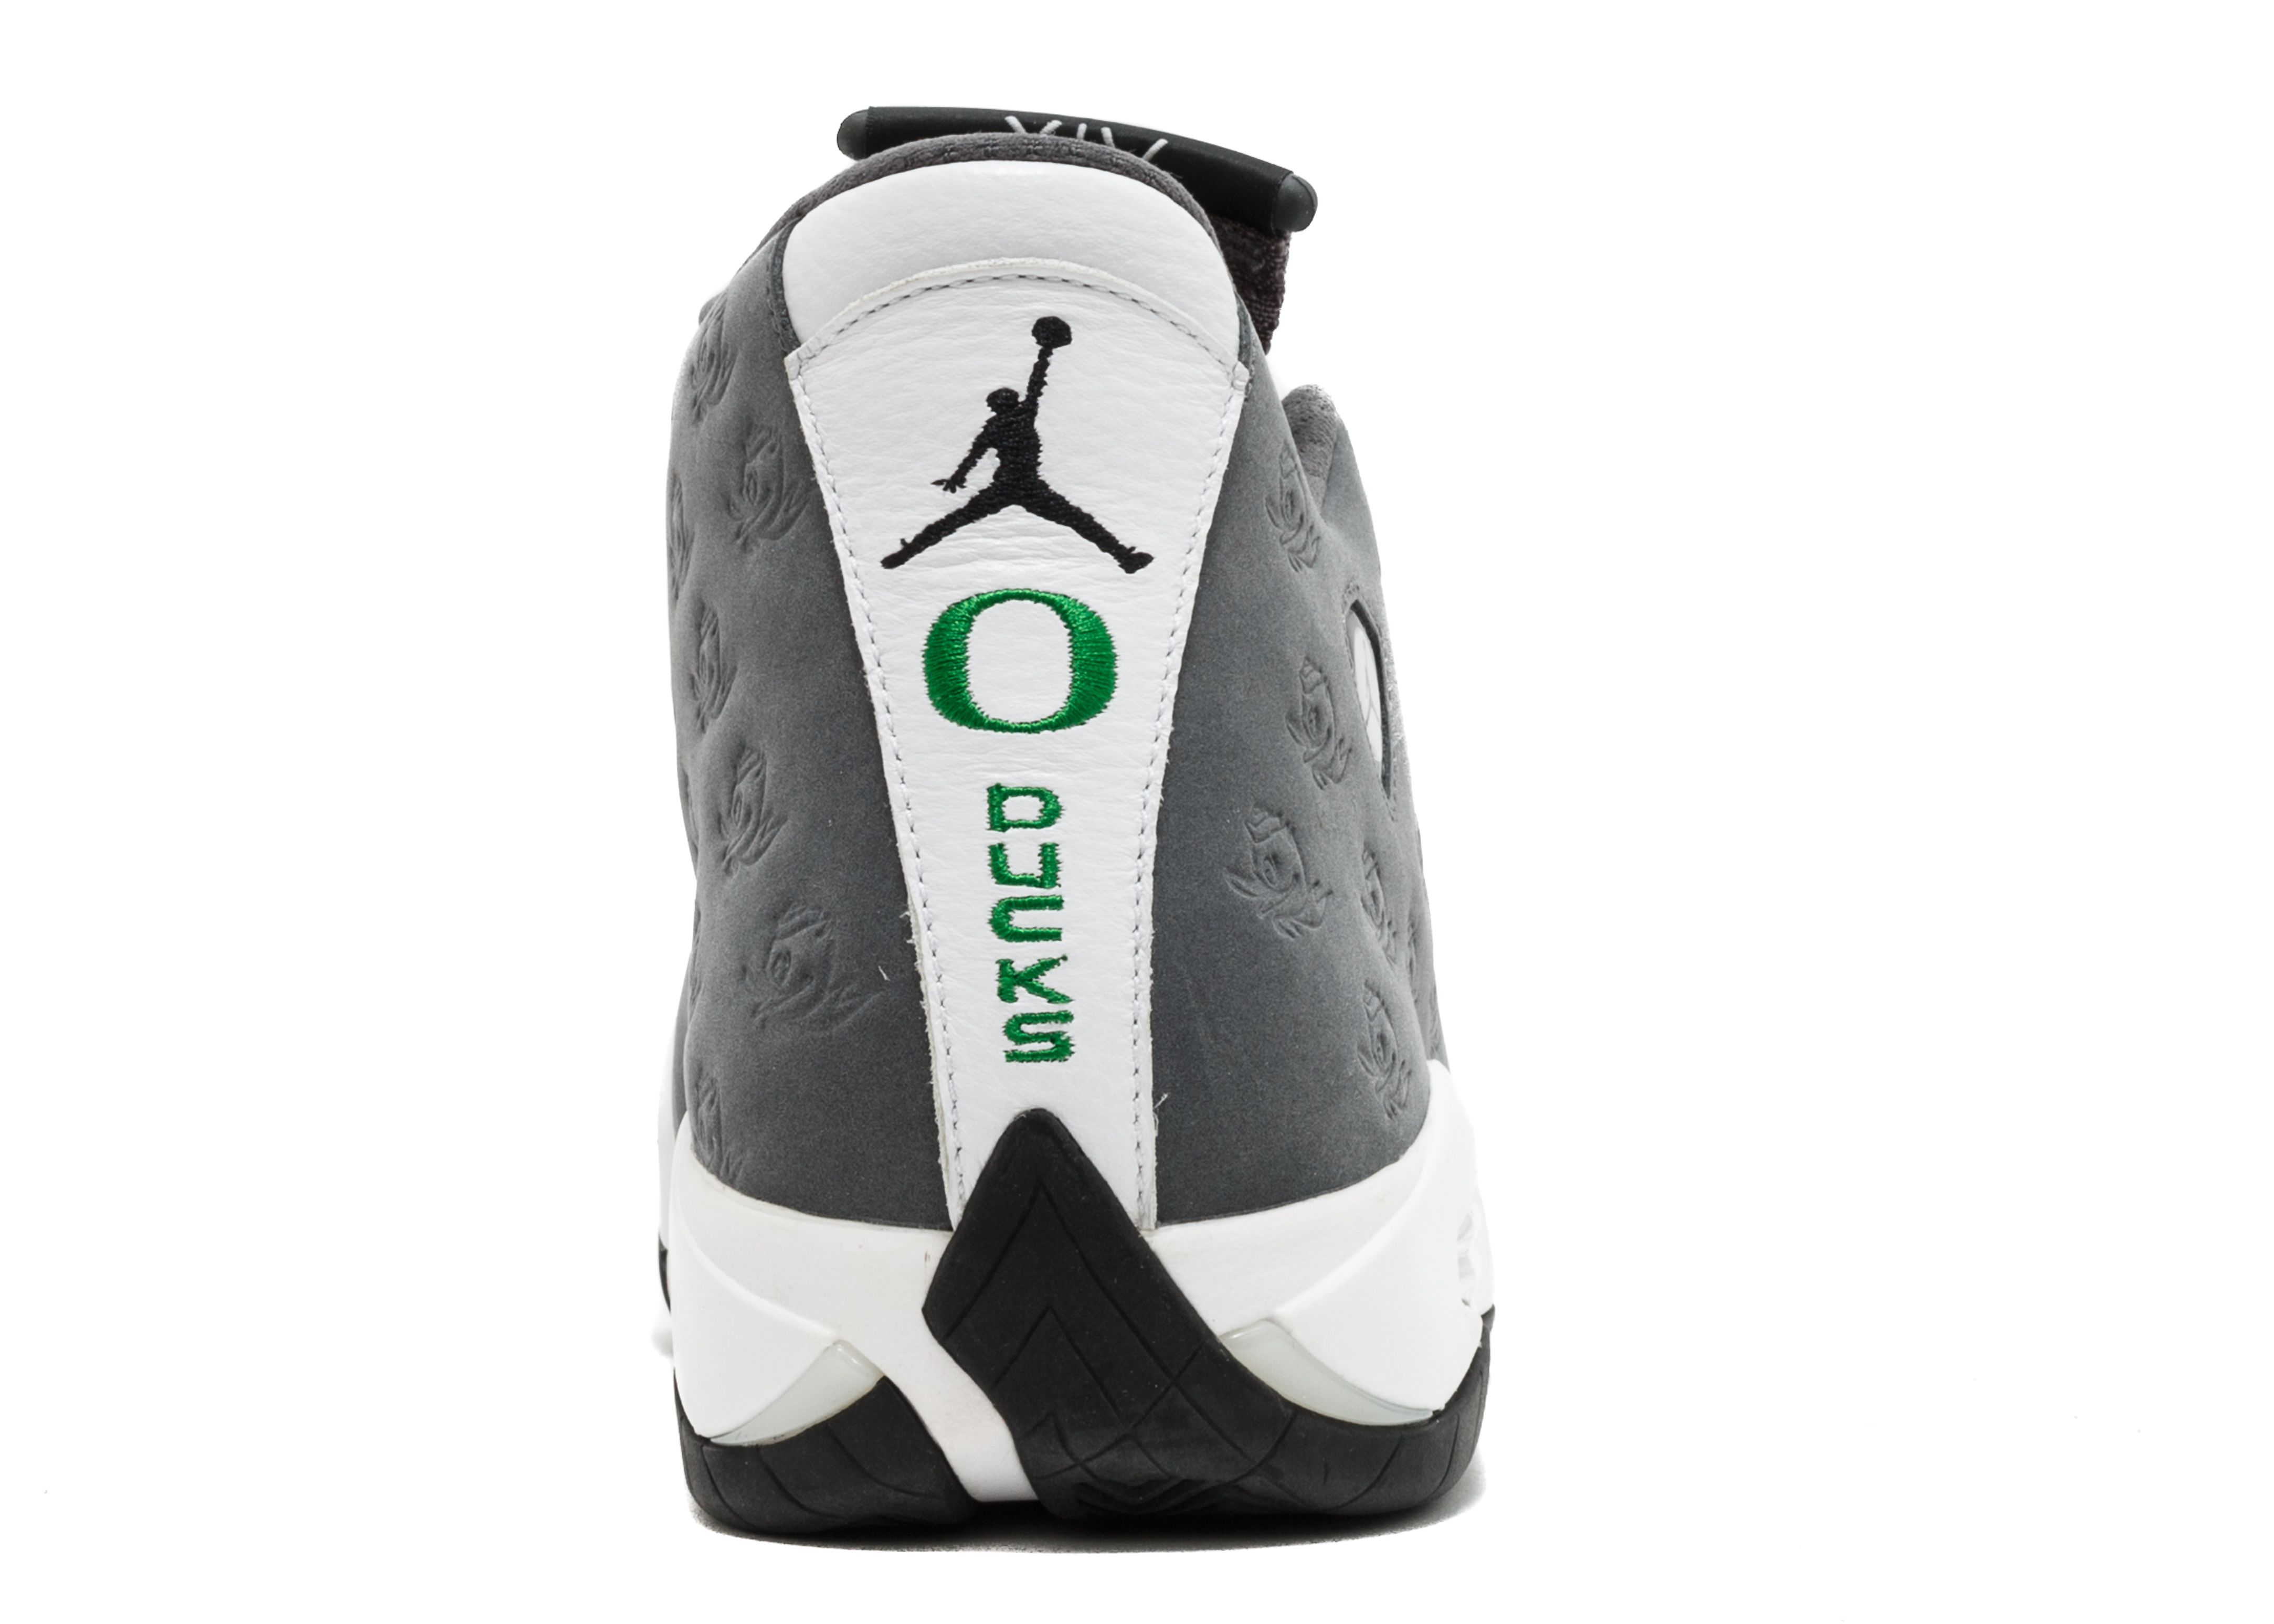 Only 330 Pairs Of The Air Jordan 14 “Oregon Ducks” PE Exist